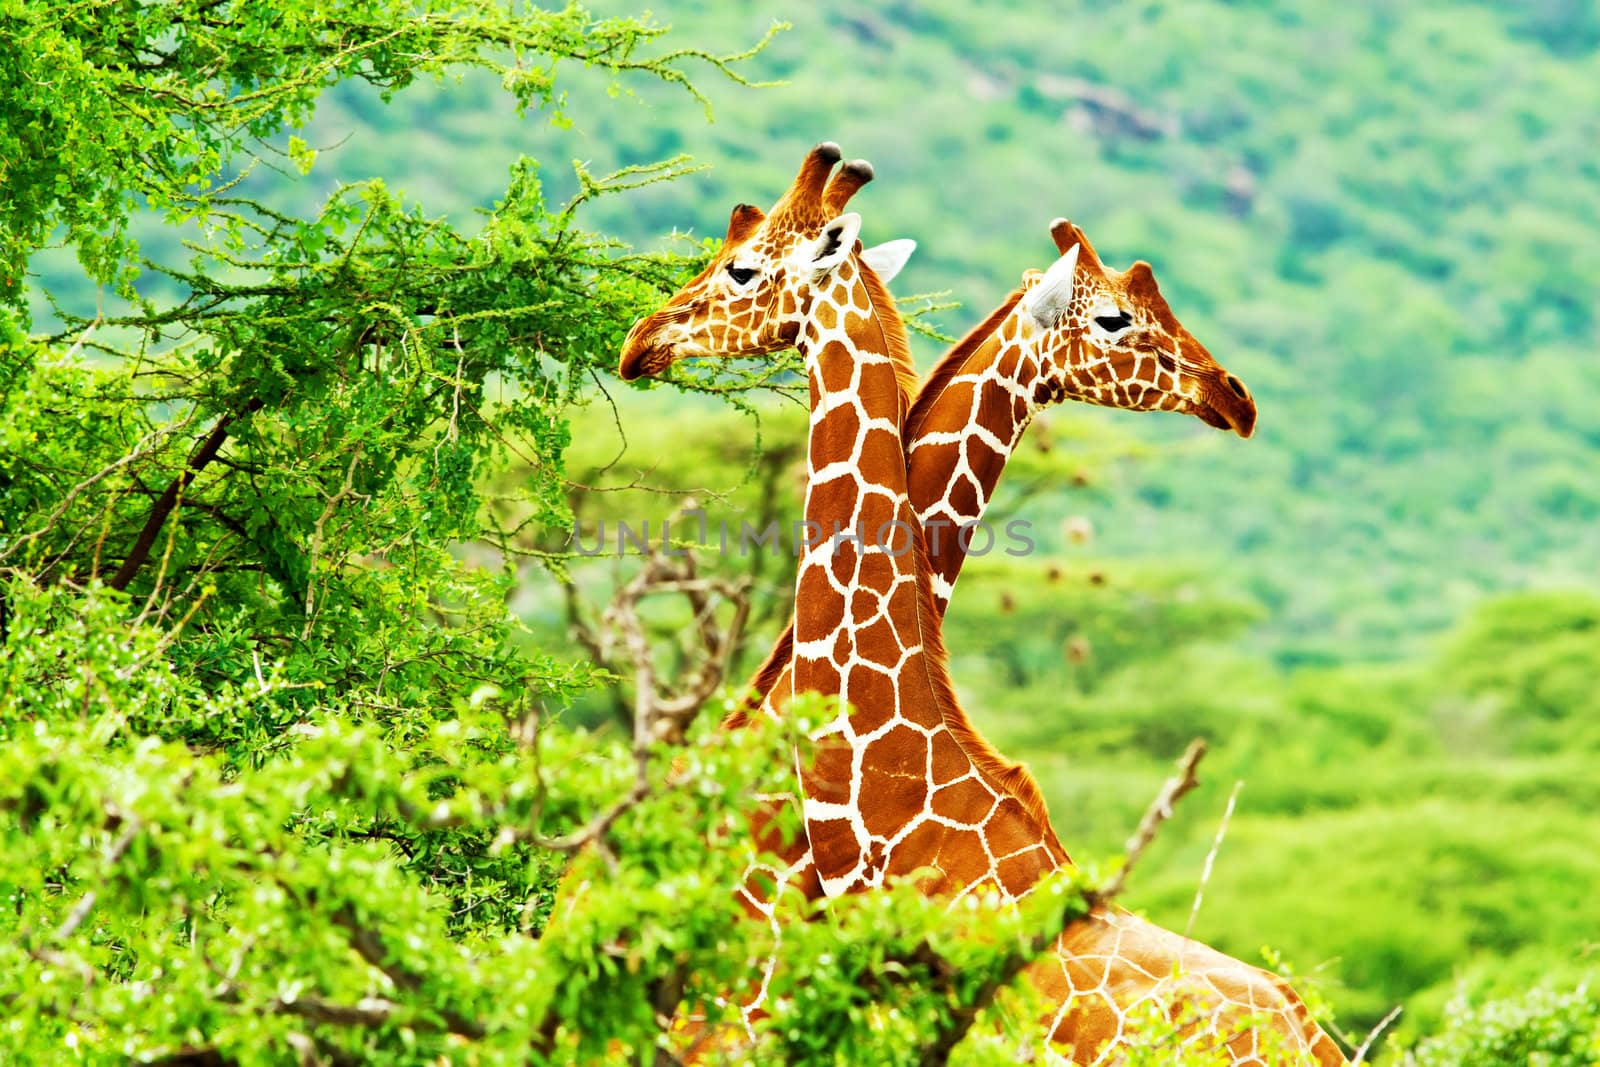 African giraffes family by Anna_Omelchenko